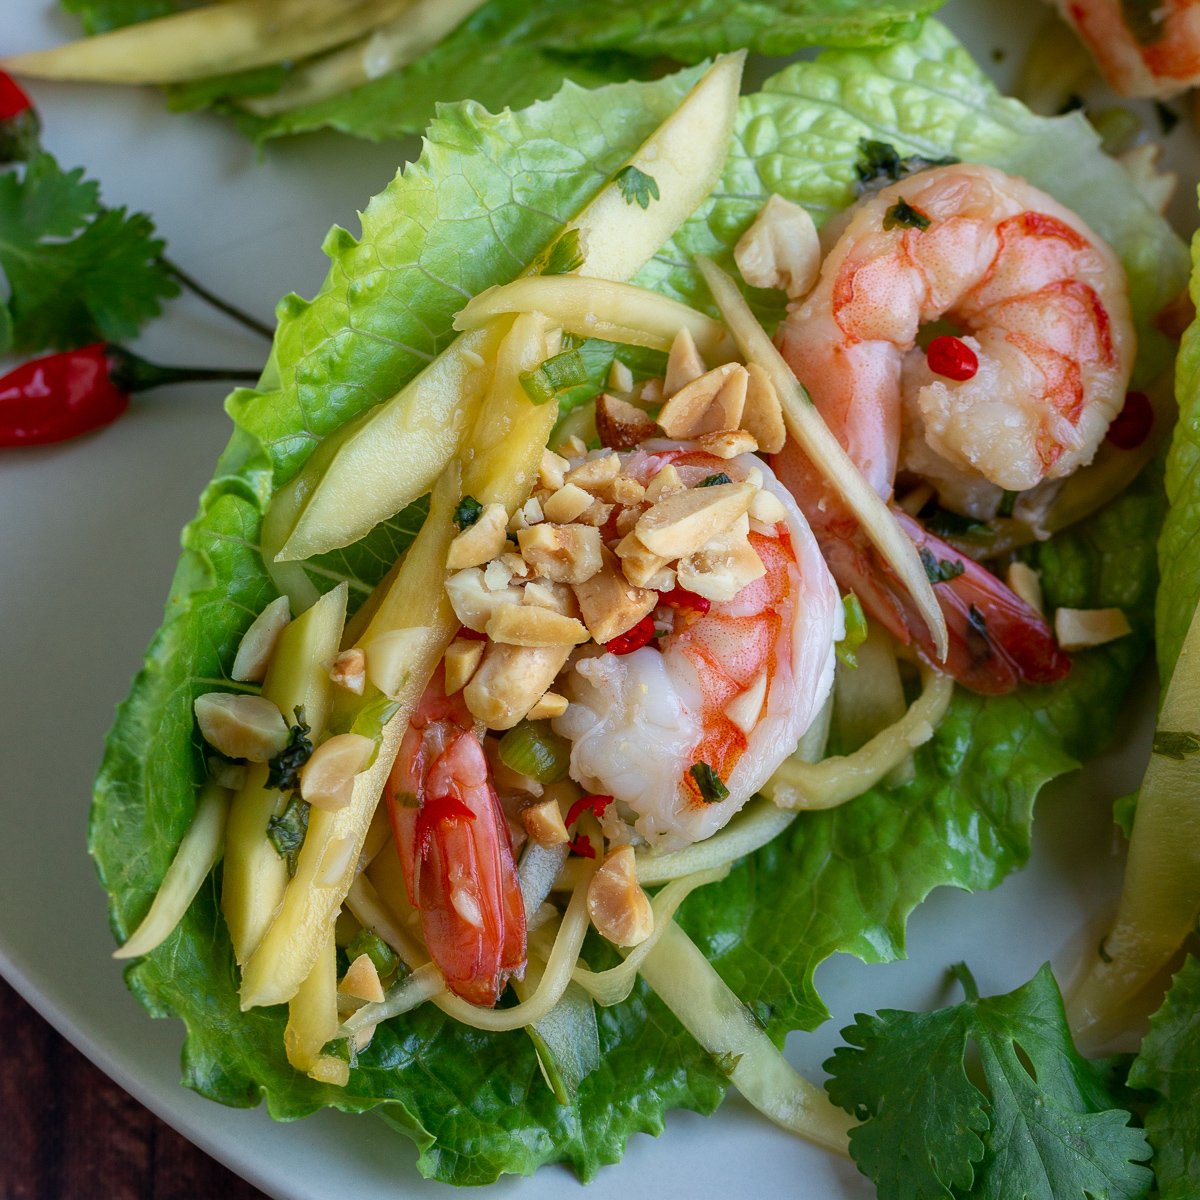 https://www.hwcmagazine.com/wp-content/uploads/2014/03/Thai-Shrimp-Mango-Salad-1200-x-1200-0101.jpg